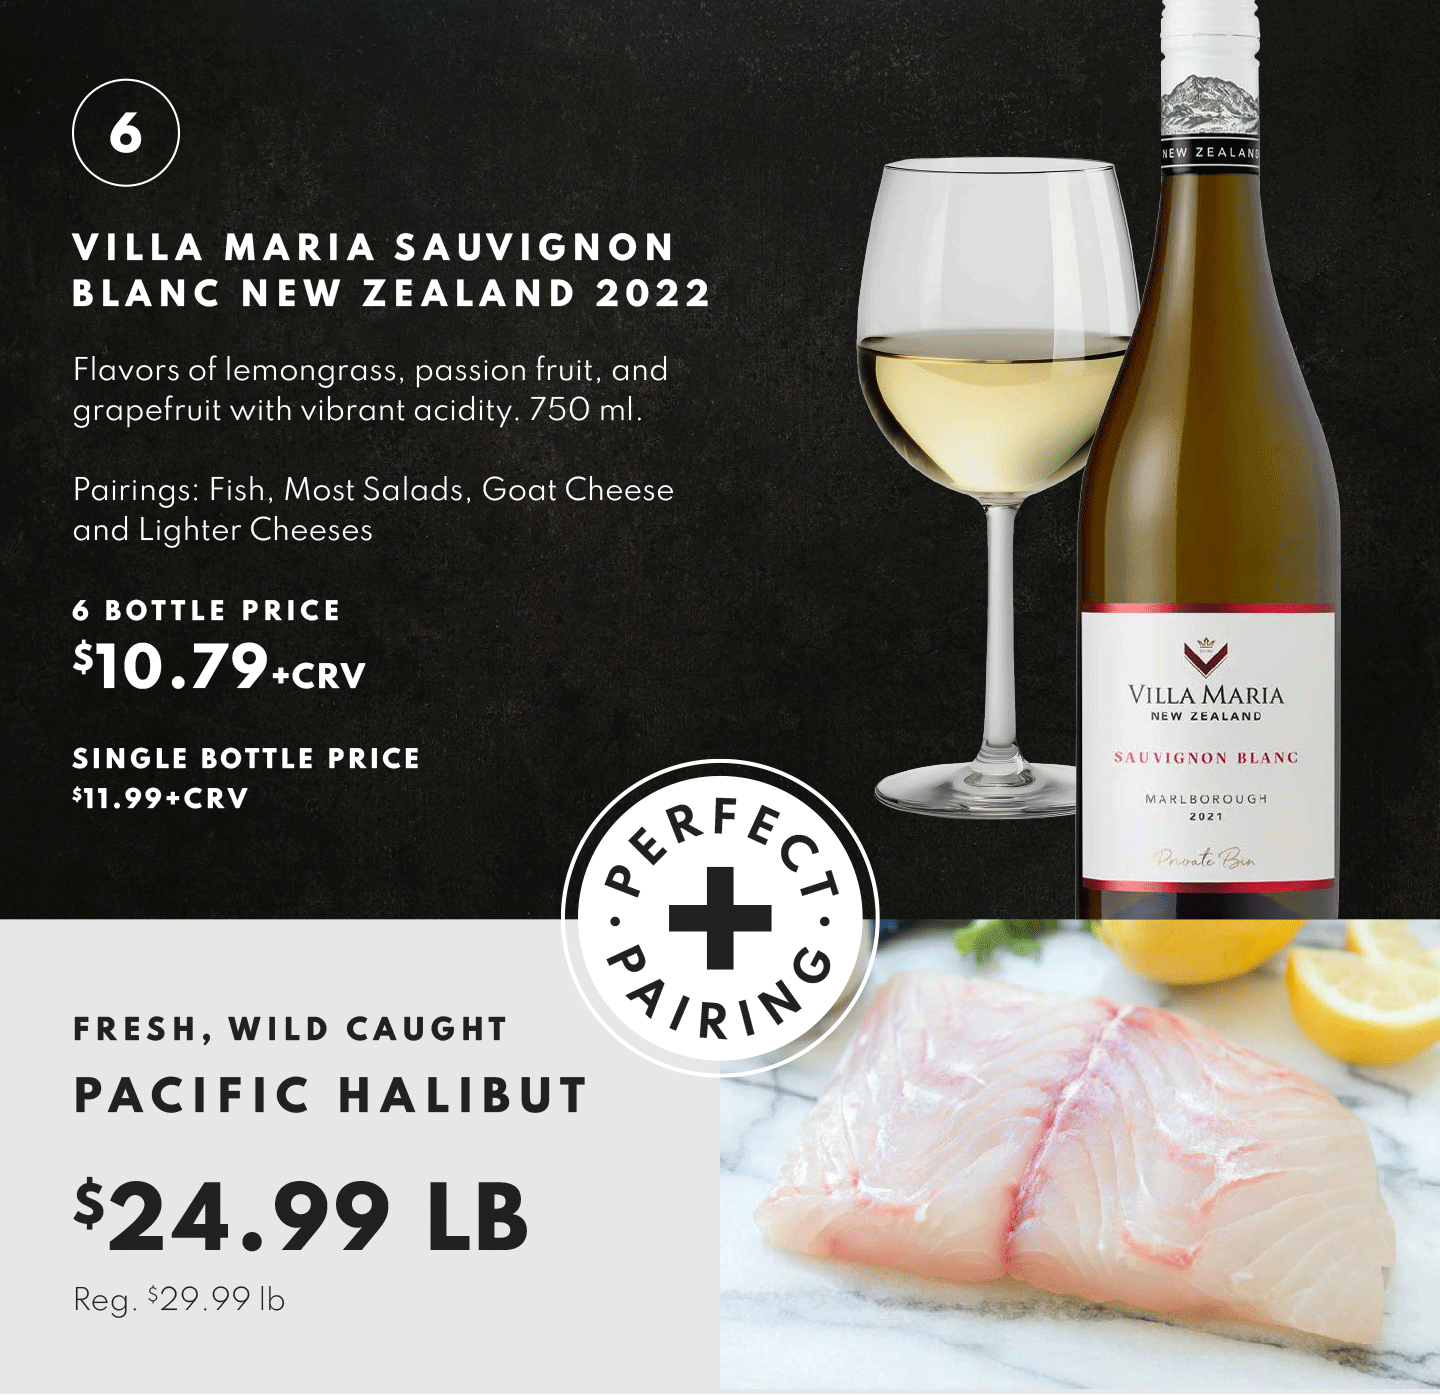 Villa Maria Sauvignon Blanc, New Zelaand 2022, $10.79 - 6 bottle price and Fresh, Wild Pacific Halibut $24.99 lb